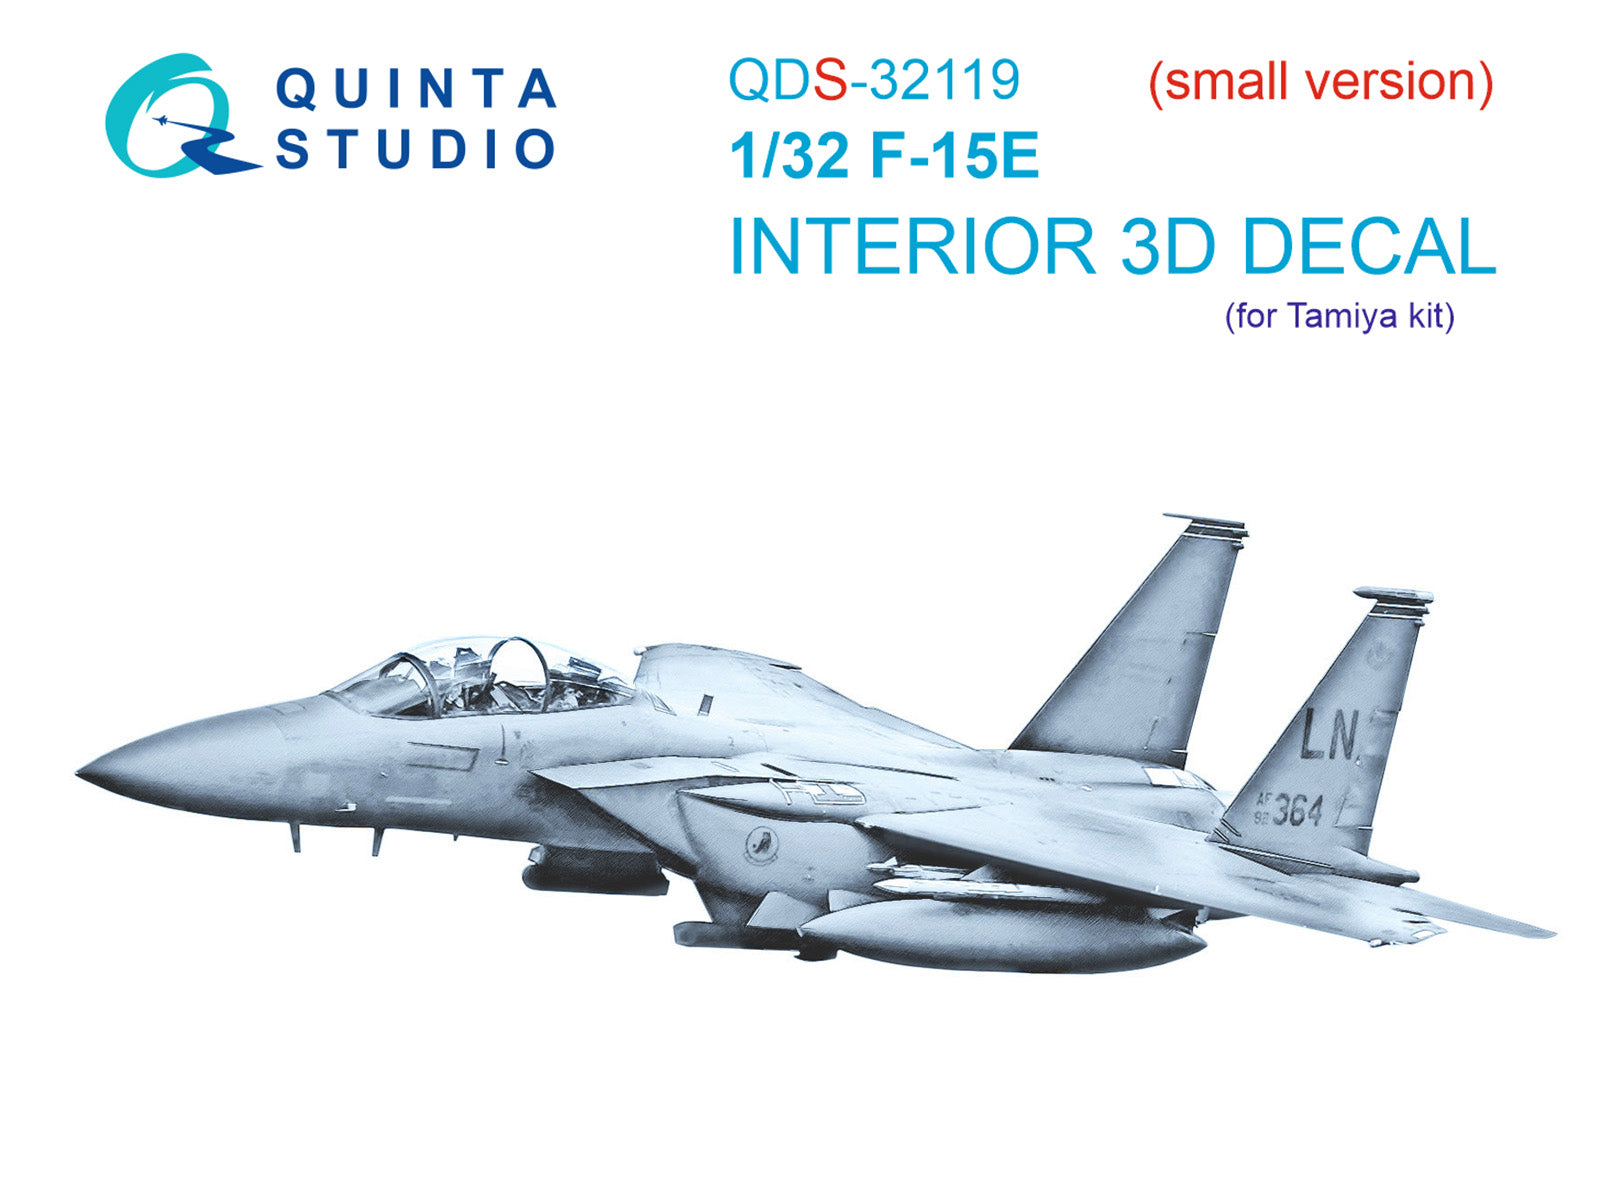 Quinta Studio - 1/32 F-15E QDS-32119 for Tamiya kit (small version)